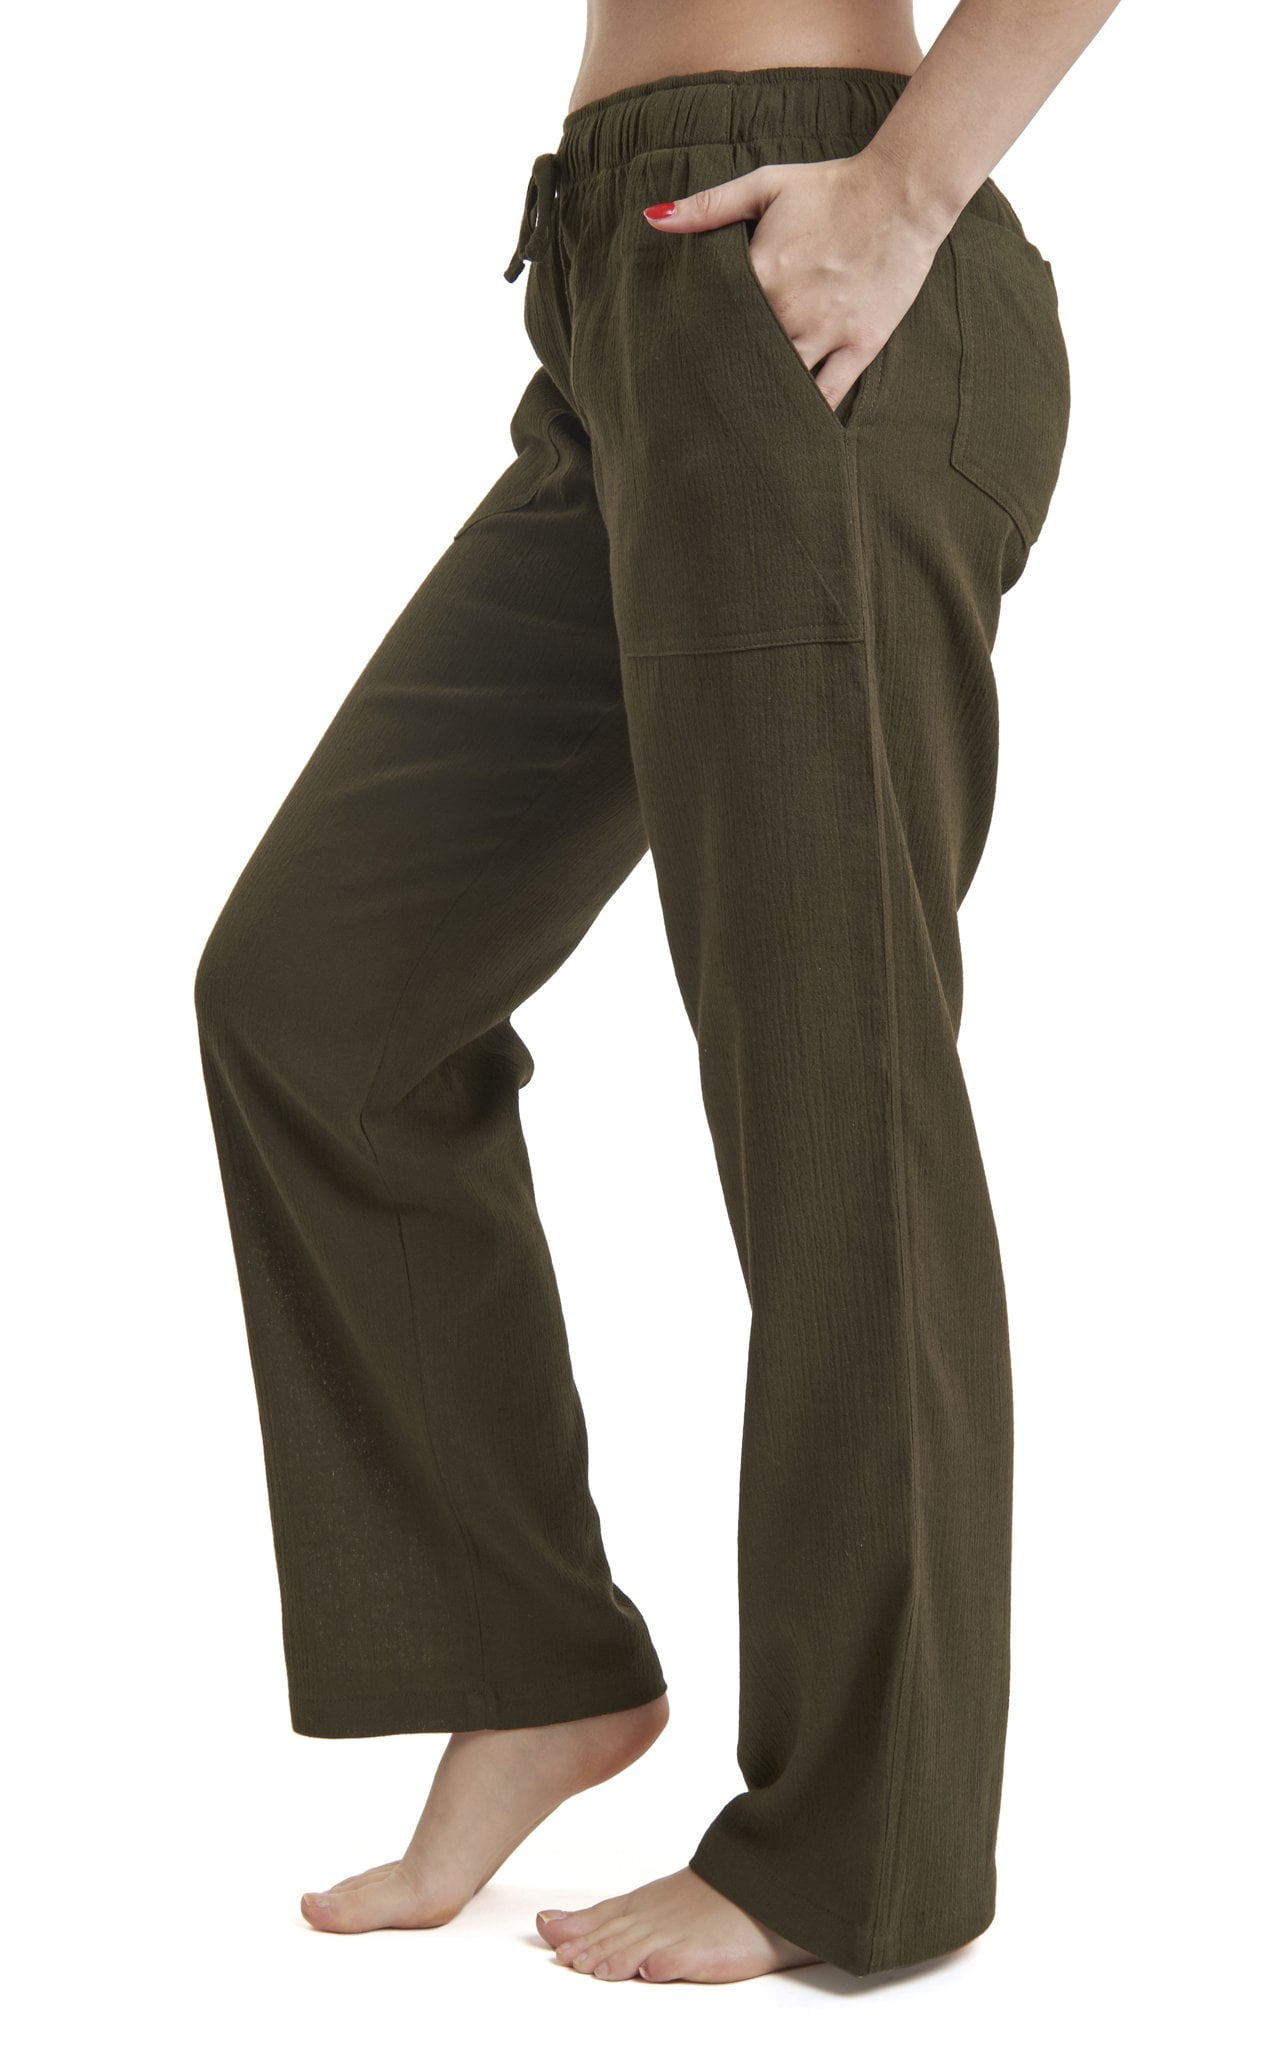 J & Ce Women's Cotton Gauze Low Waist Beach Pants with Pockets 